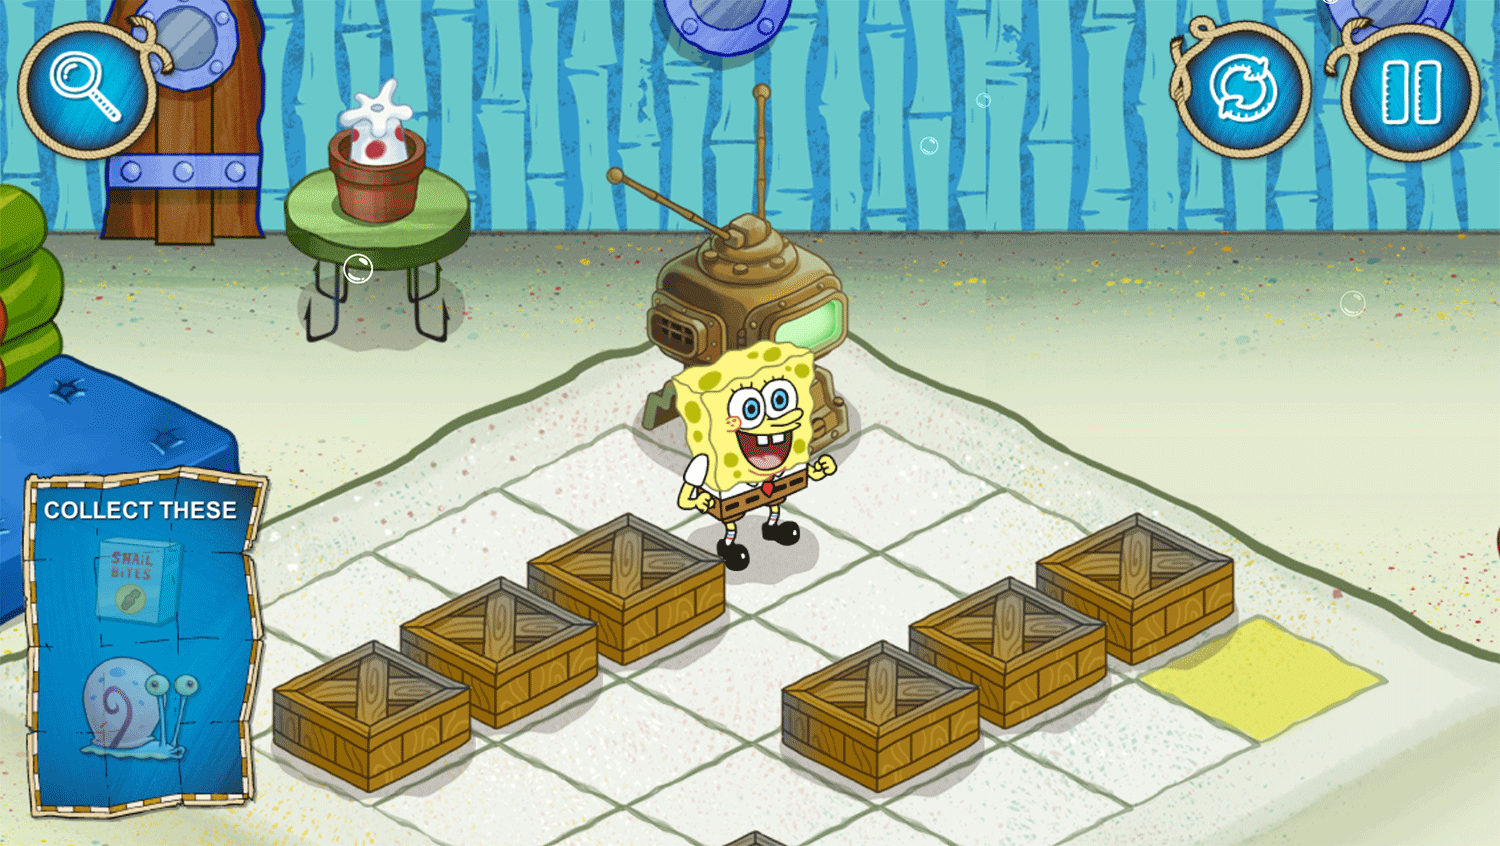 Spongebob Squarepants Beachy Keen Game Screenshots.